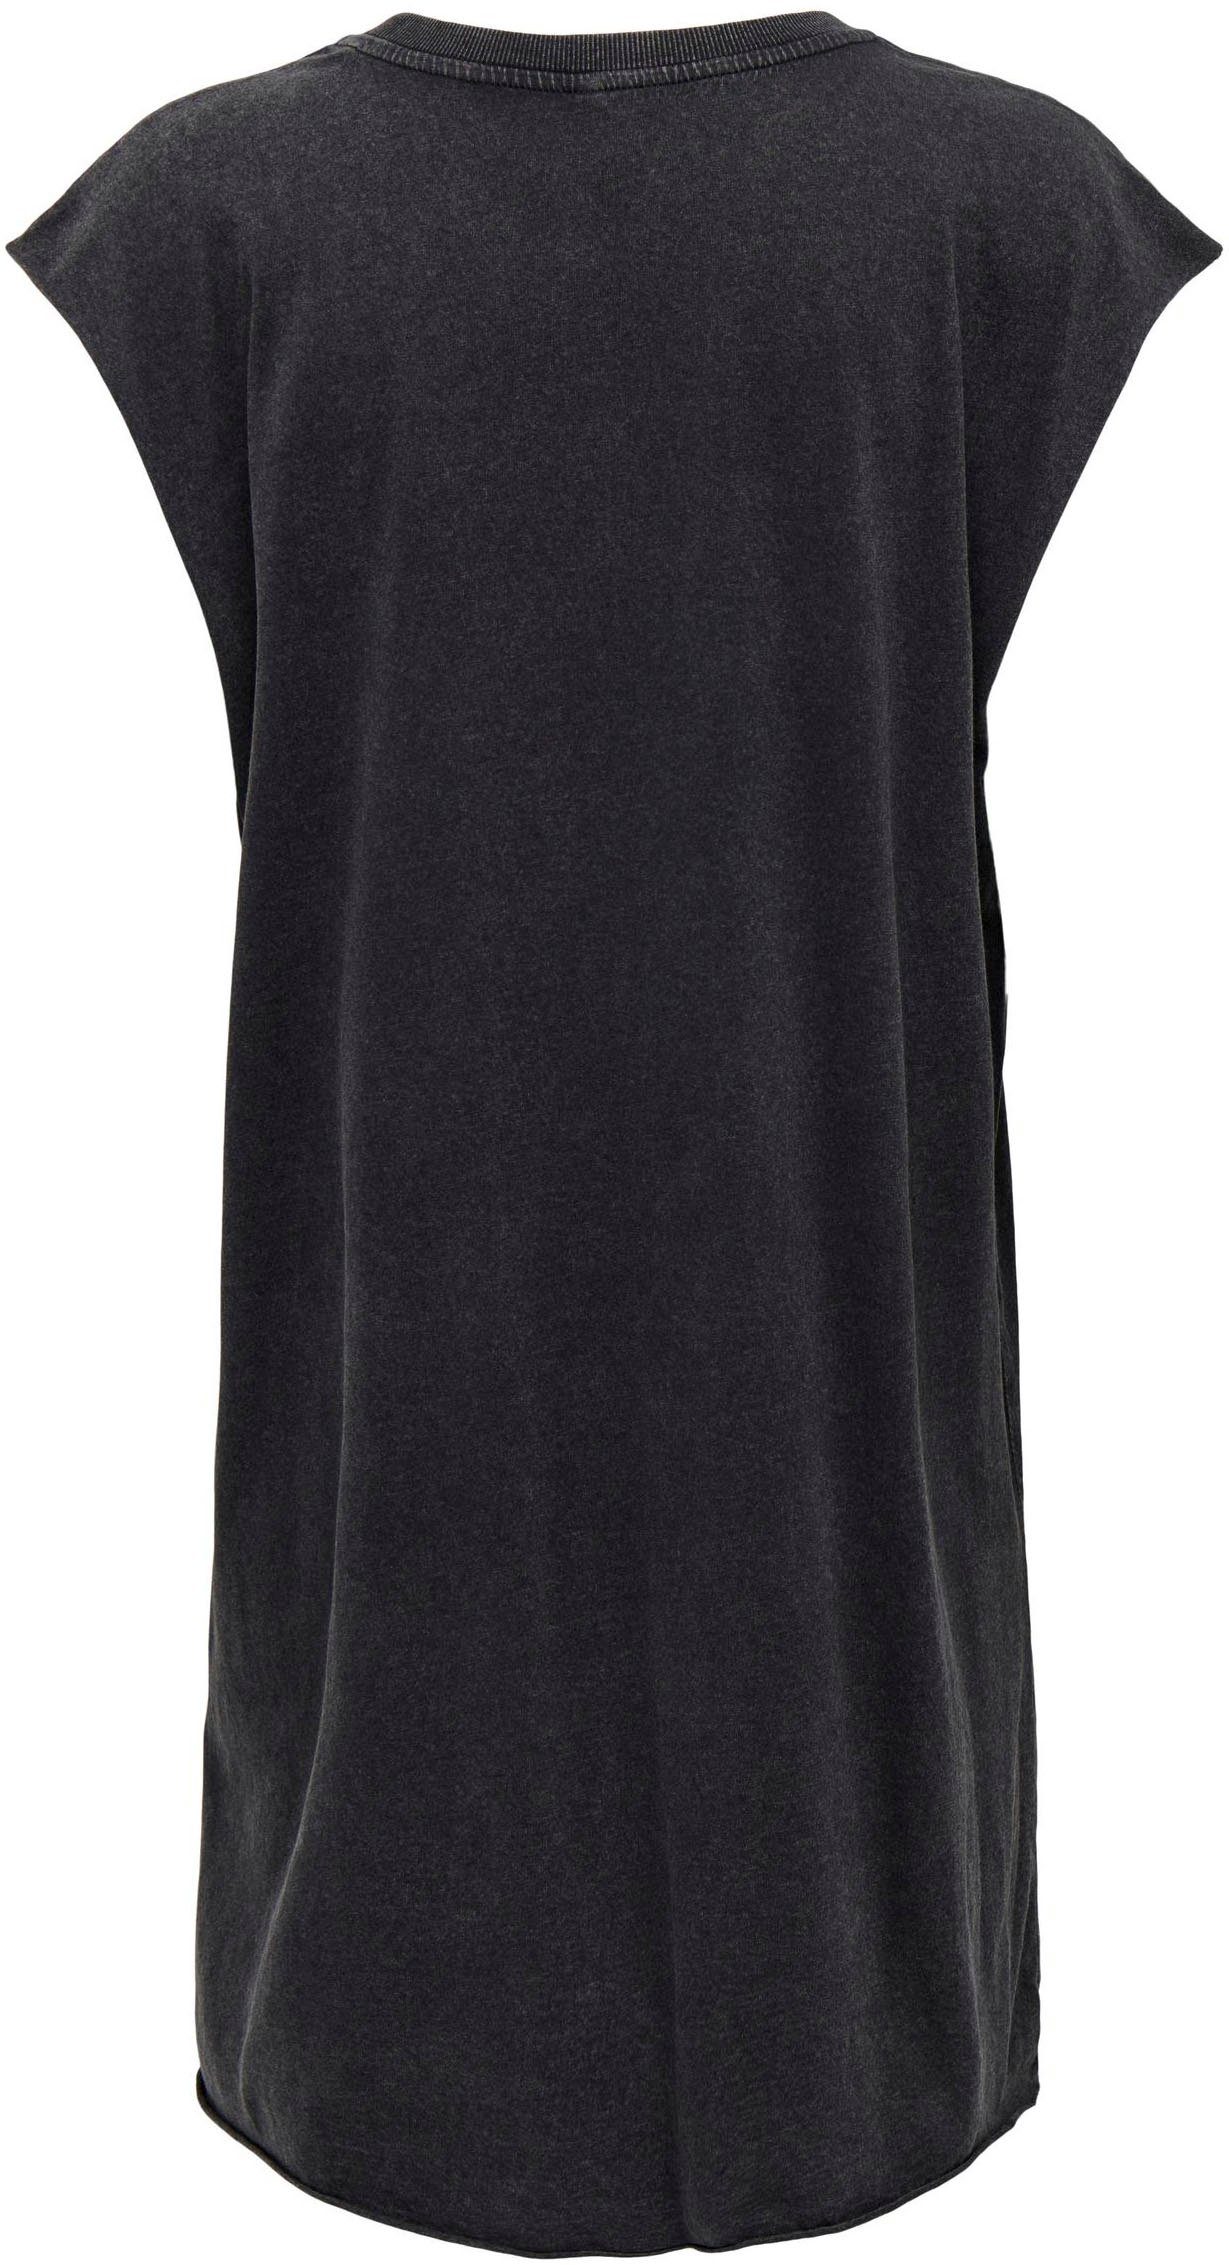 Black PALMS BOX JRS ONLY ONLLUCY S/L Shirtkleid Print:Tropical DRESS